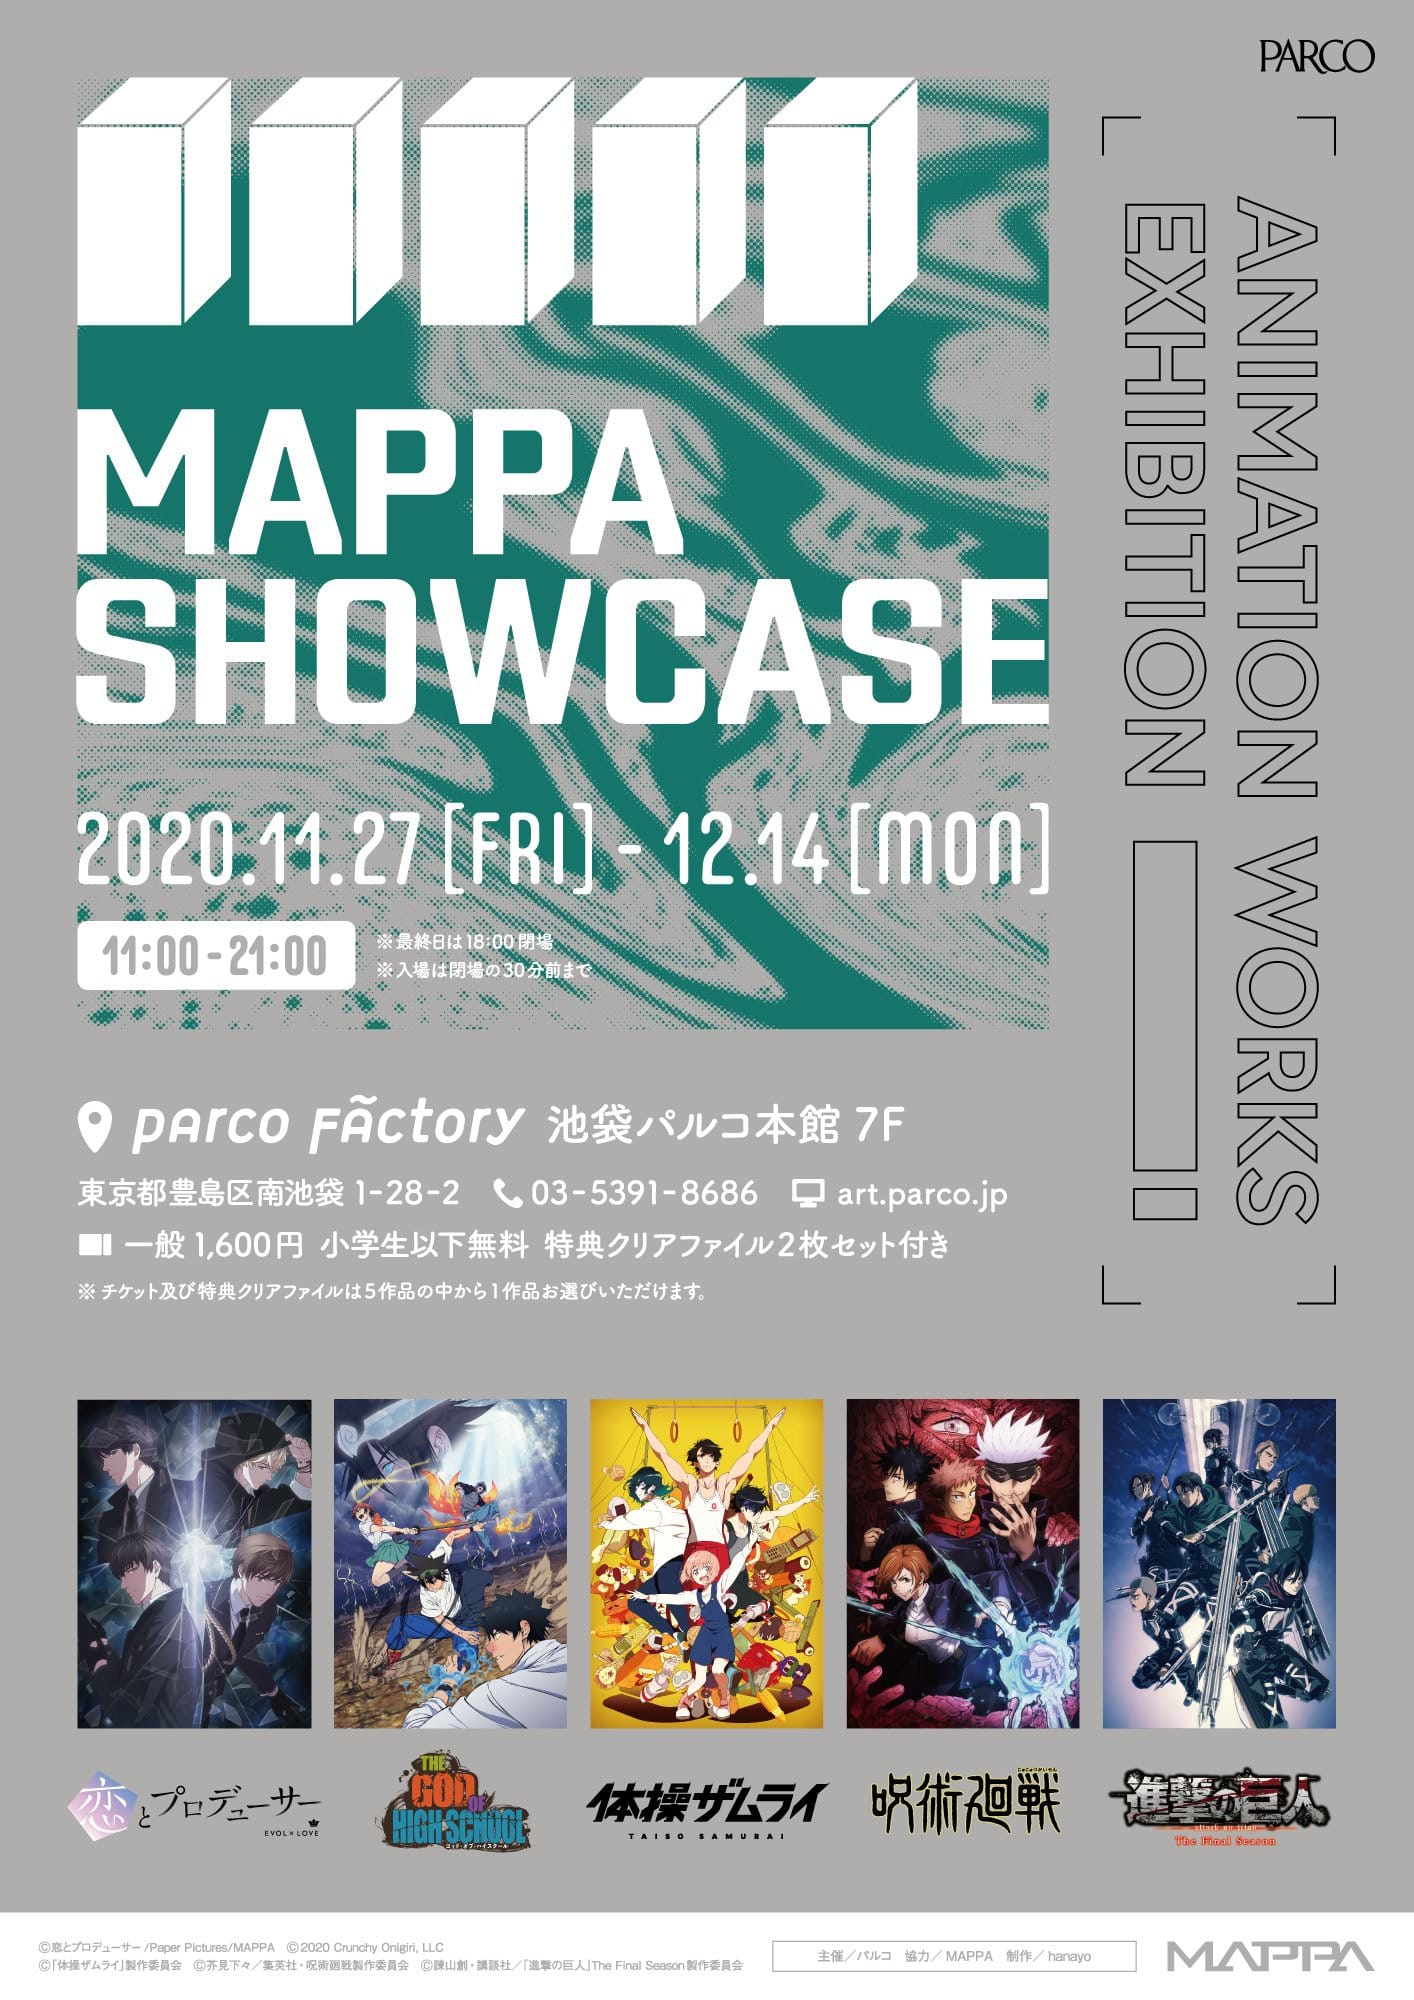 MAPPA SHOWCASE in パルコファクトリー池袋 11.27-12.14 企画展開催!!